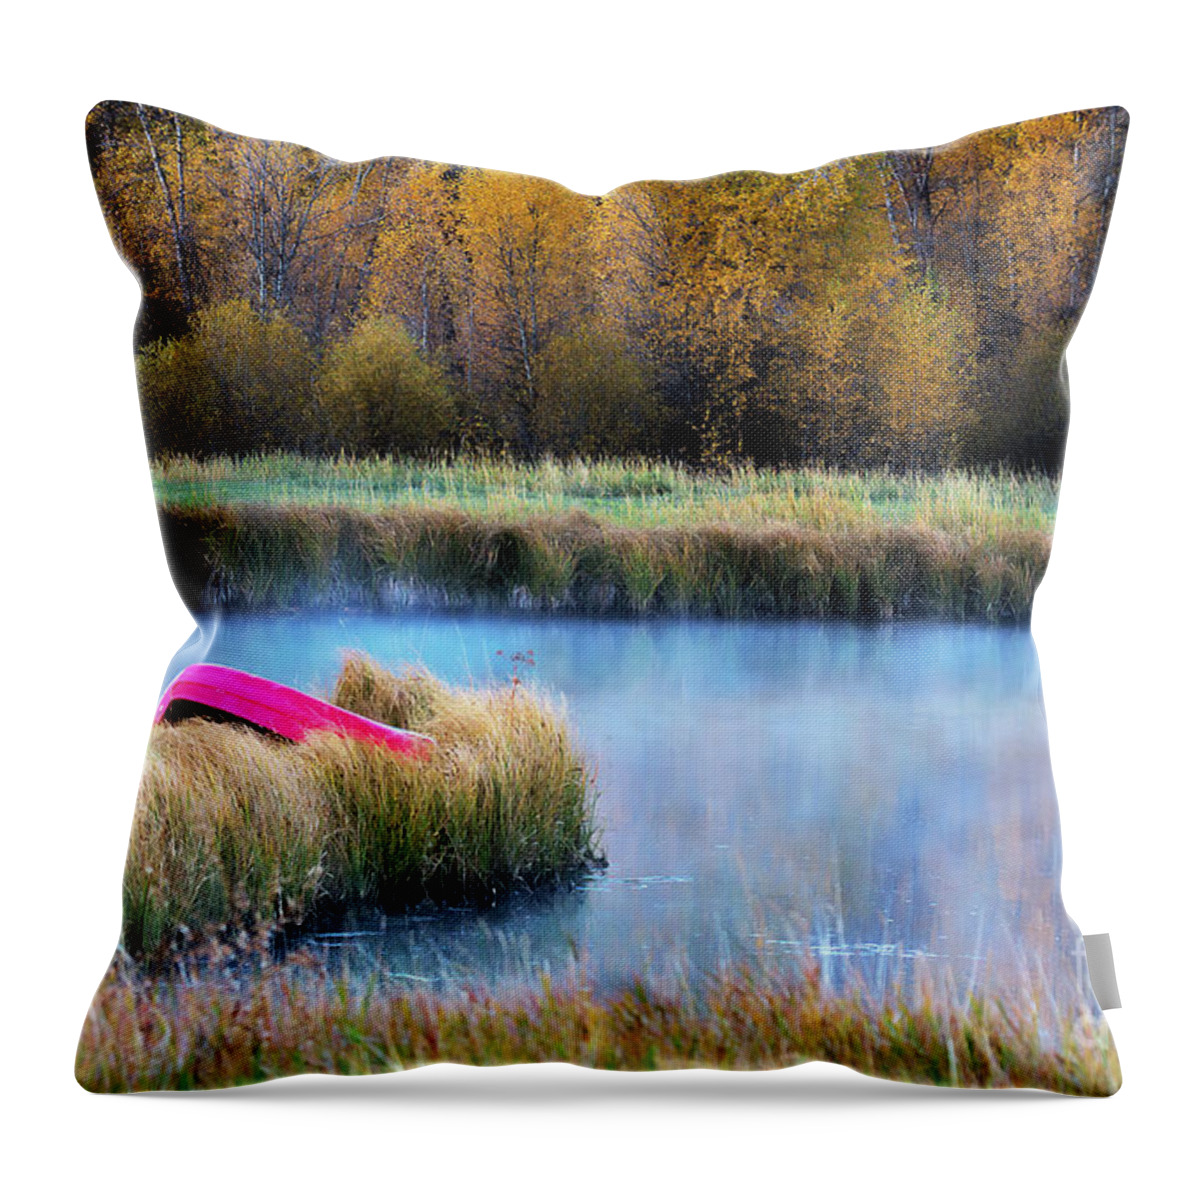 Autumn Colors Landscape Throw Pillow featuring the photograph Autumn Dry Dock by Jim Garrison